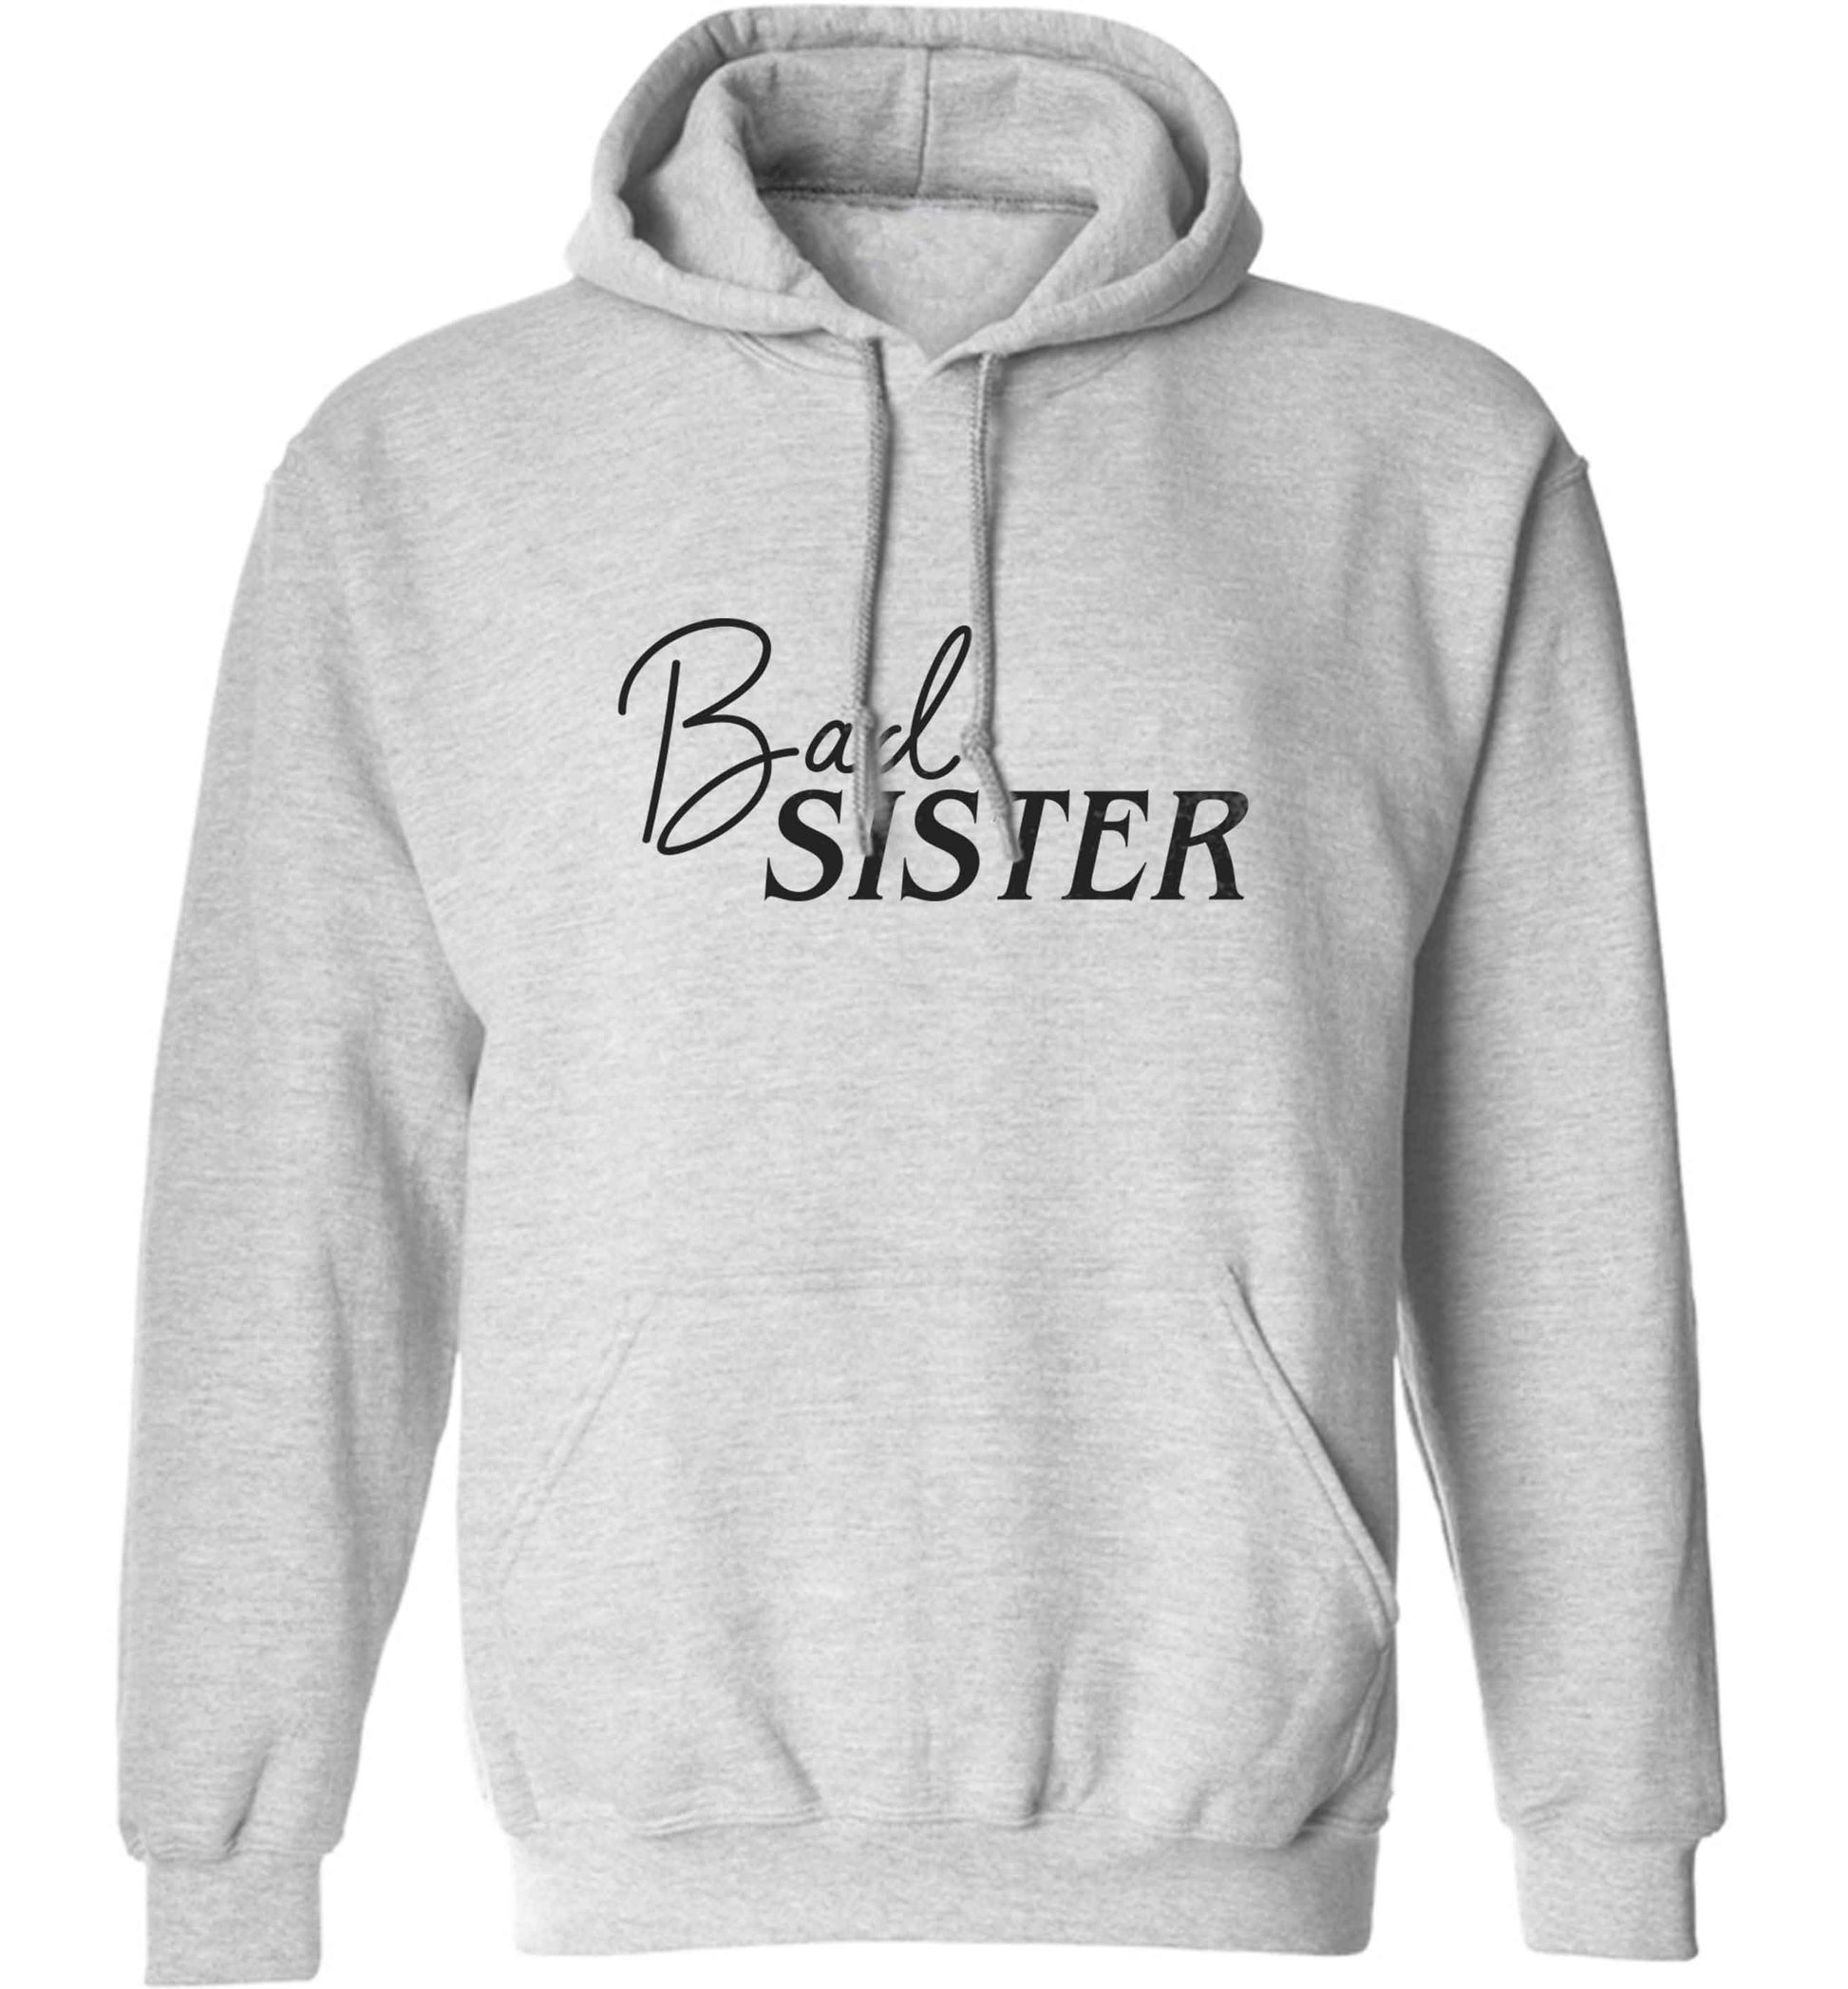 Bad sister adults unisex grey hoodie 2XL